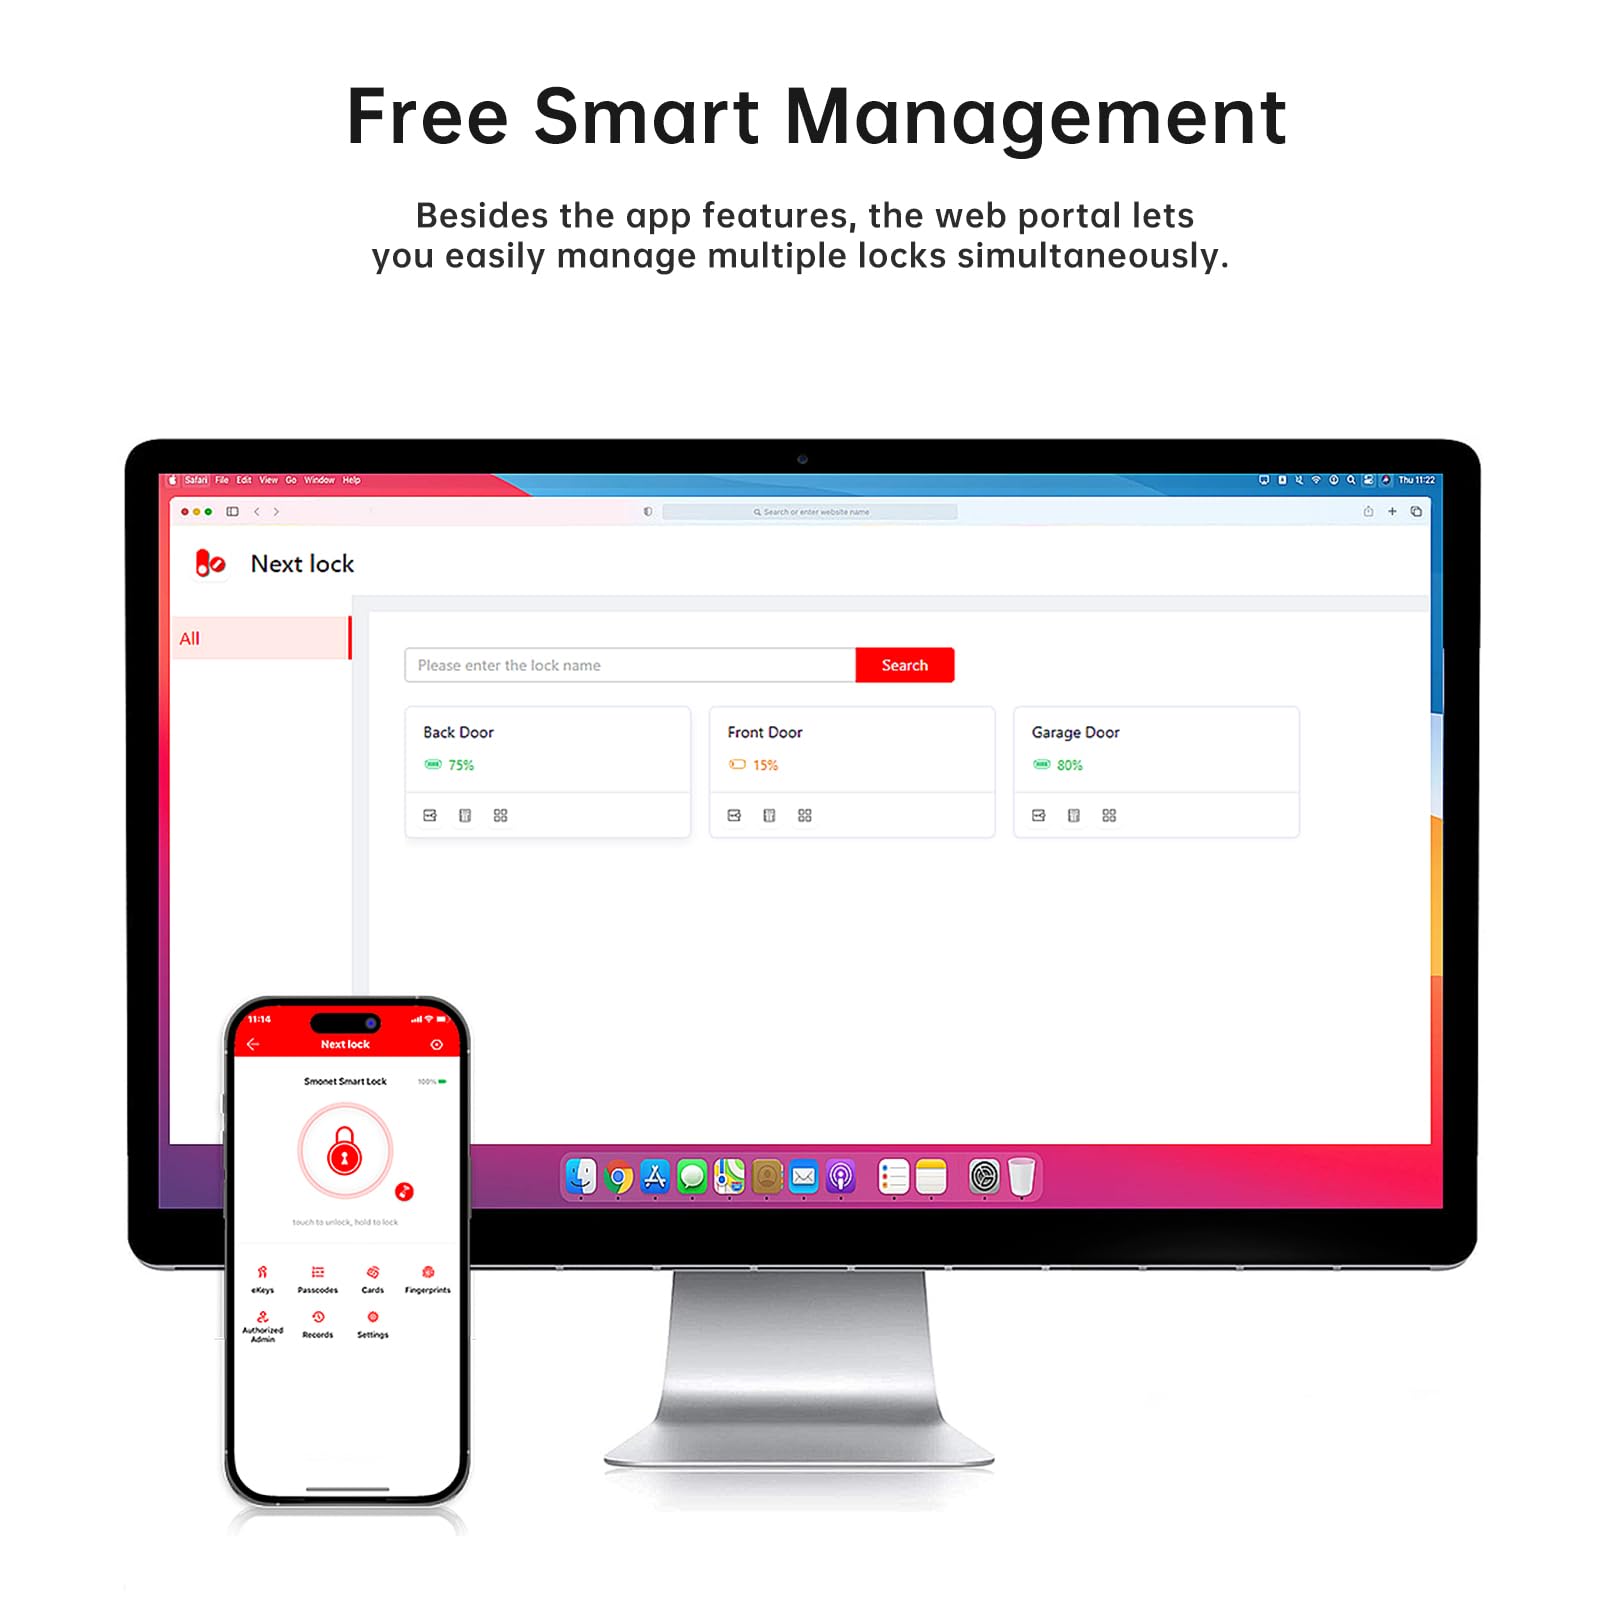 Free Smart Management